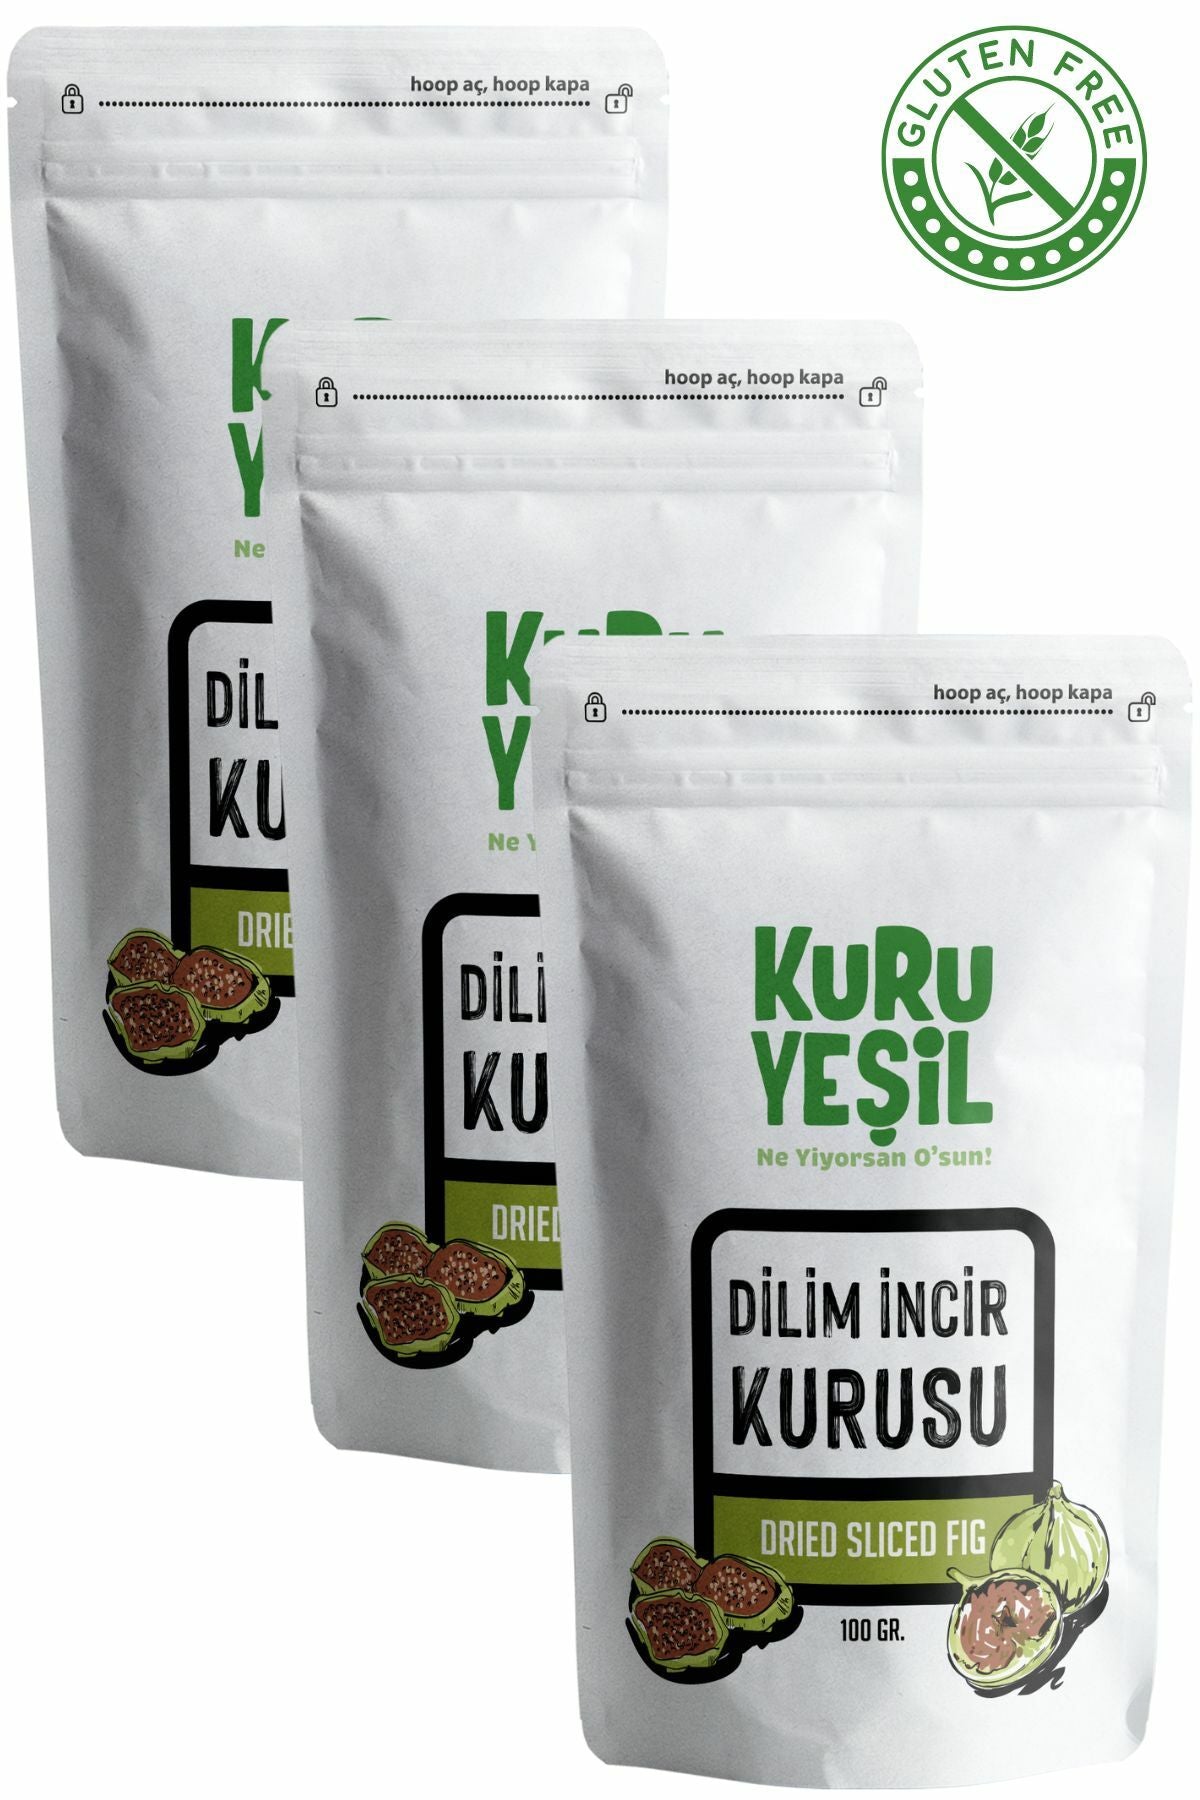 kuru yeşil dried figs 3 pack 3 pcs 100g 1